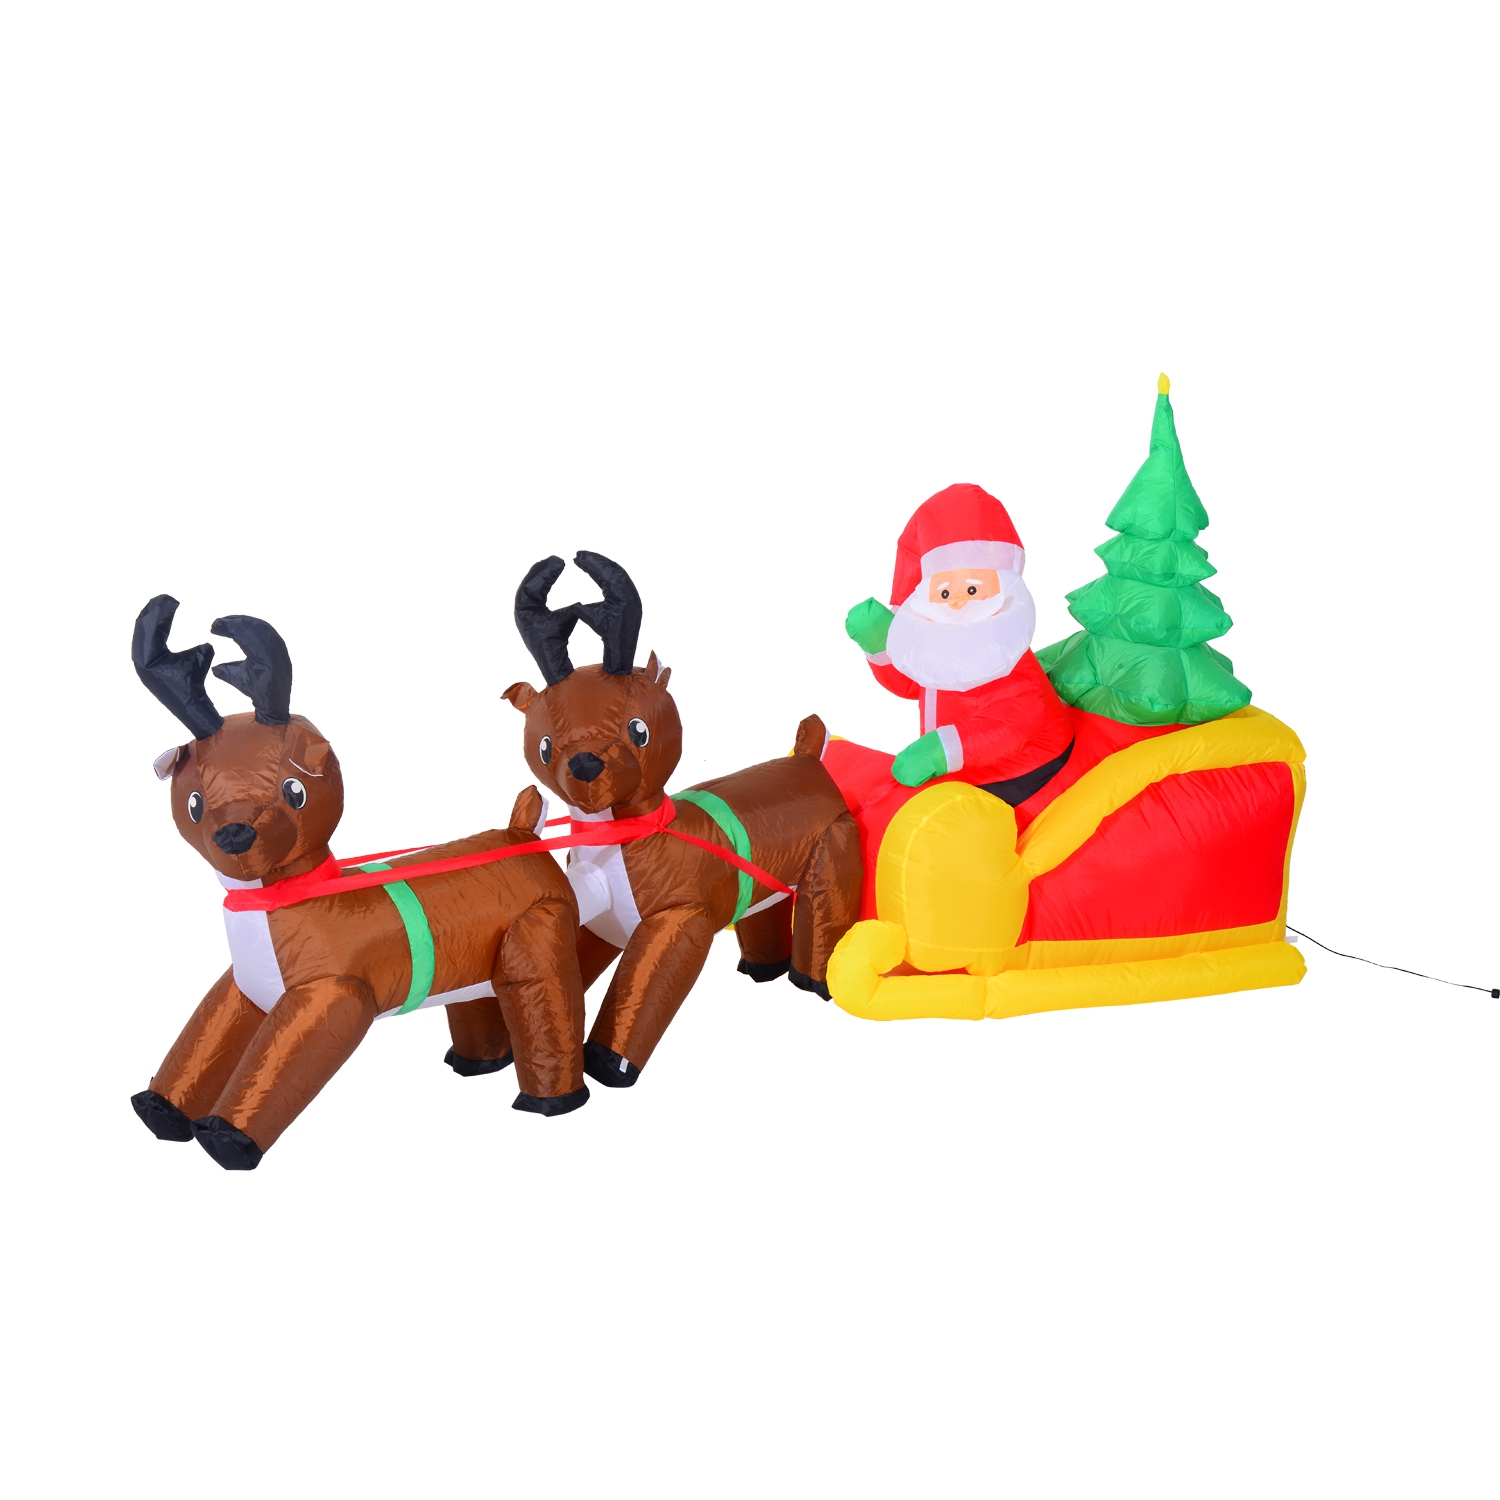 HOMCOM 7ft Inflatable Christmas Santa in Sleigh Reindeer LED Lighted Decoration